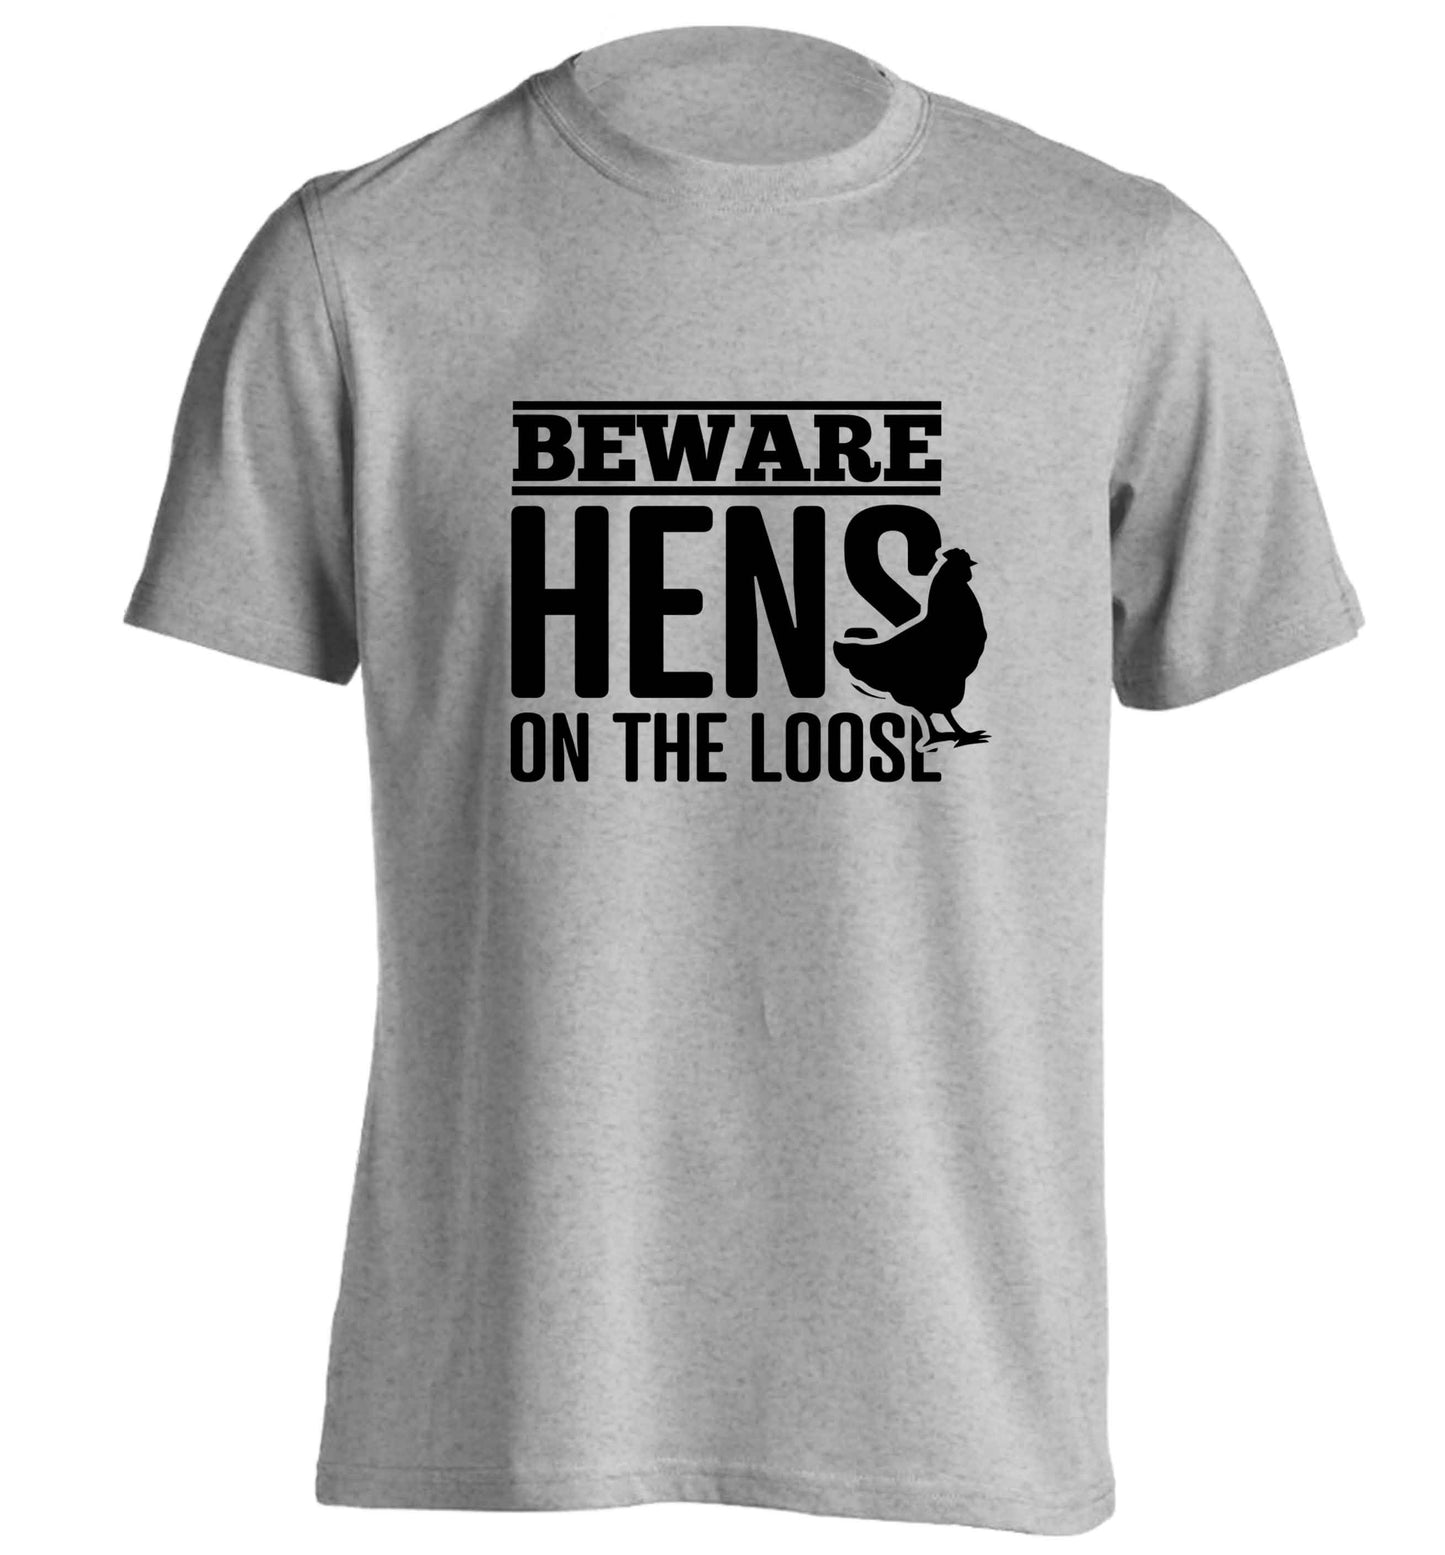 Beware hens on the loose adults unisex grey Tshirt 2XL